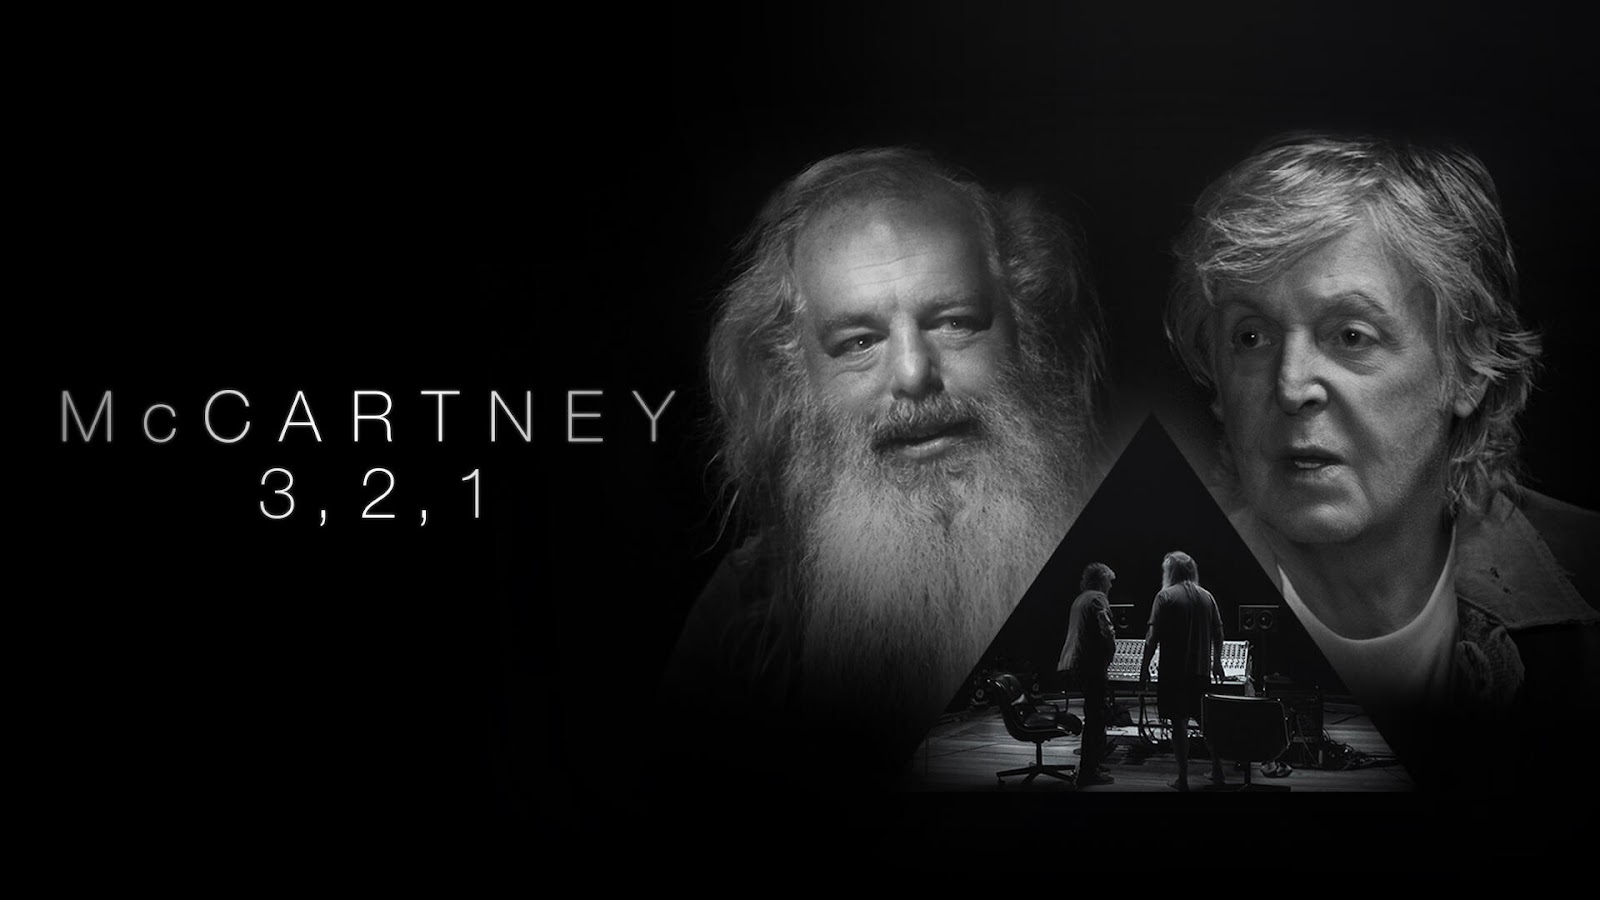 McCartney 3,2,1 (2021) - Hulu original series of all time